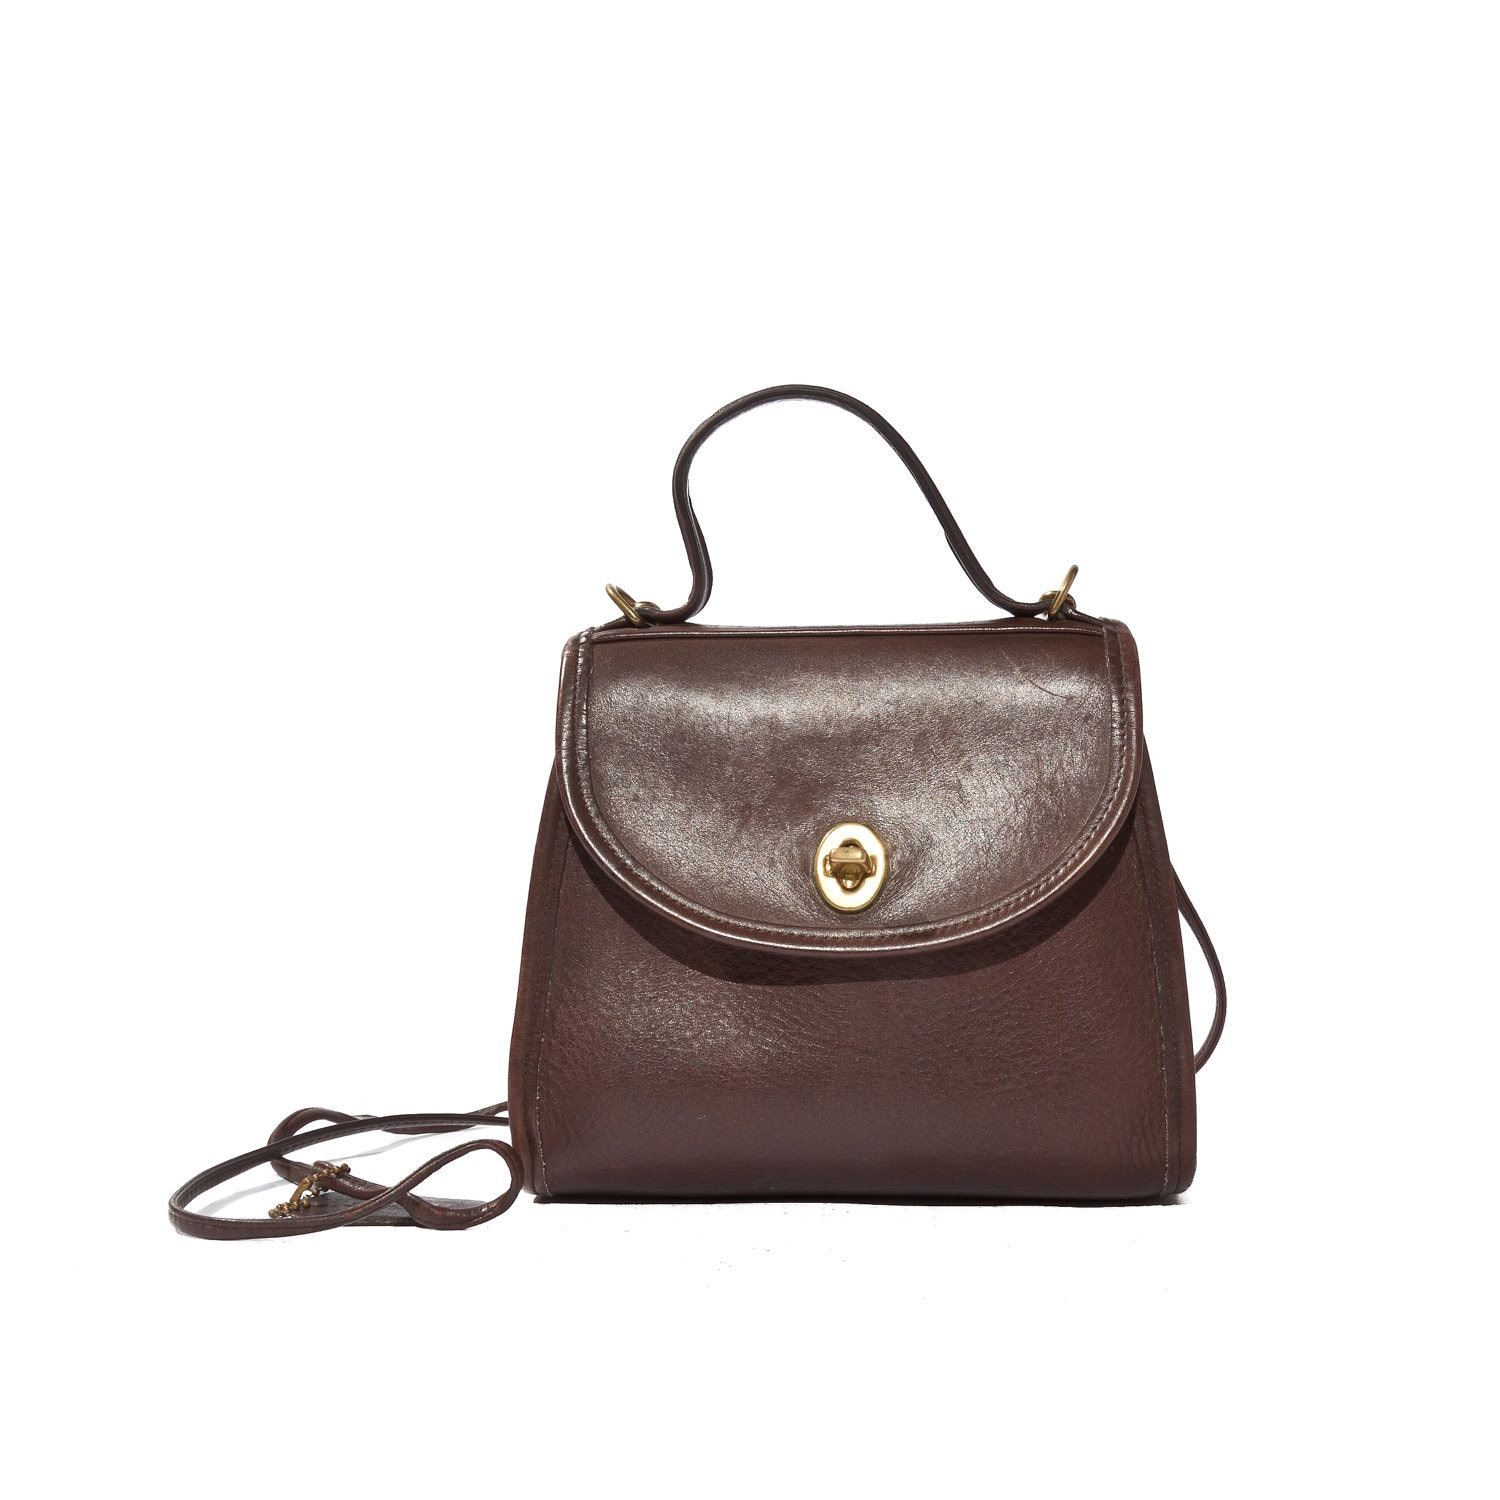 Vintage Coach Bag Tiny Pixie Handbag with Thin Shoulder Strap